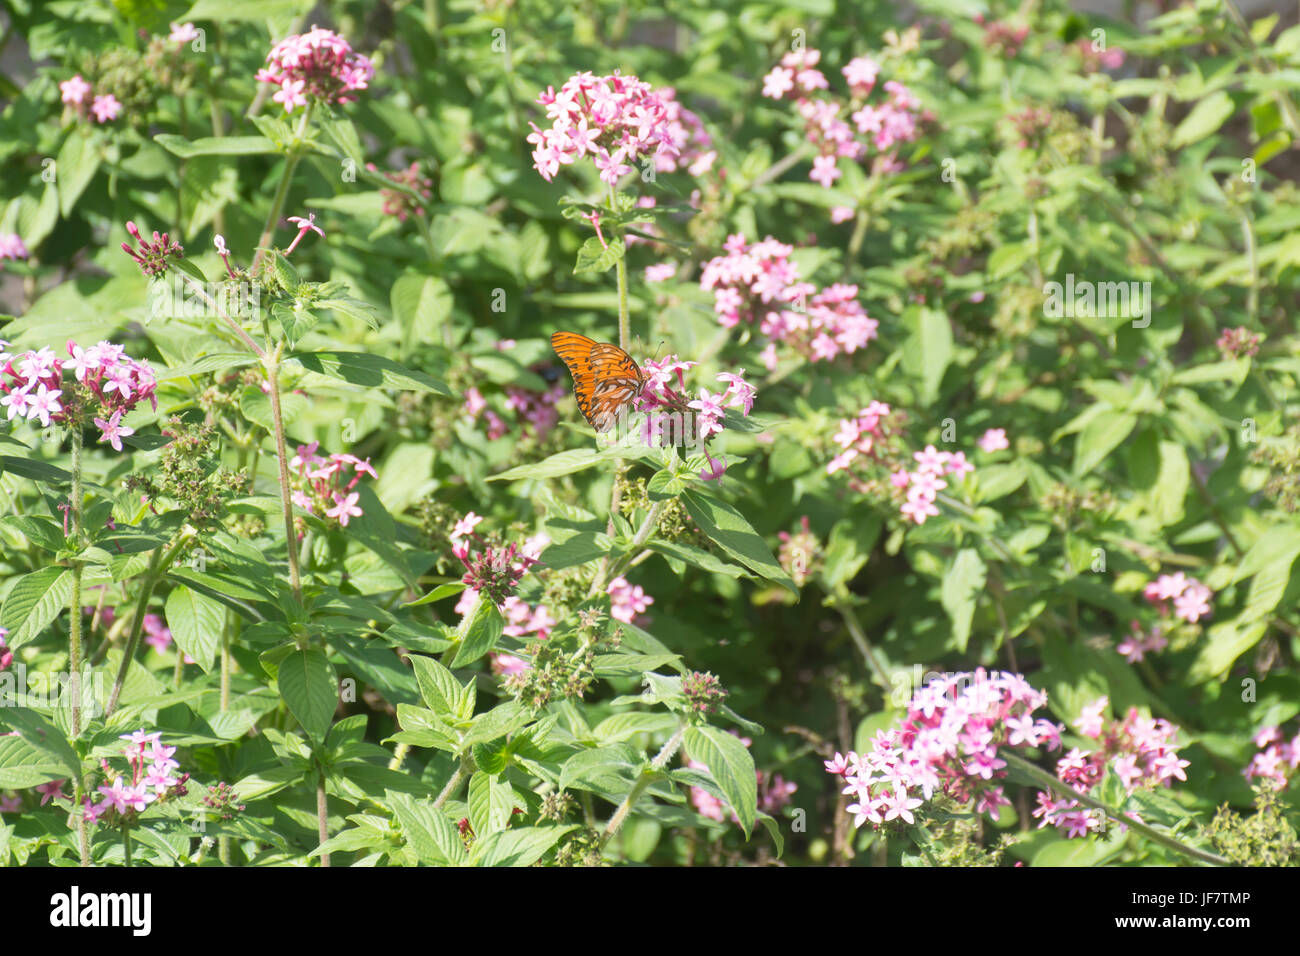 Gulf fritillary butterfly (Agraulis vanillae) alimentazione su pentas lanceolata fiori Foto Stock